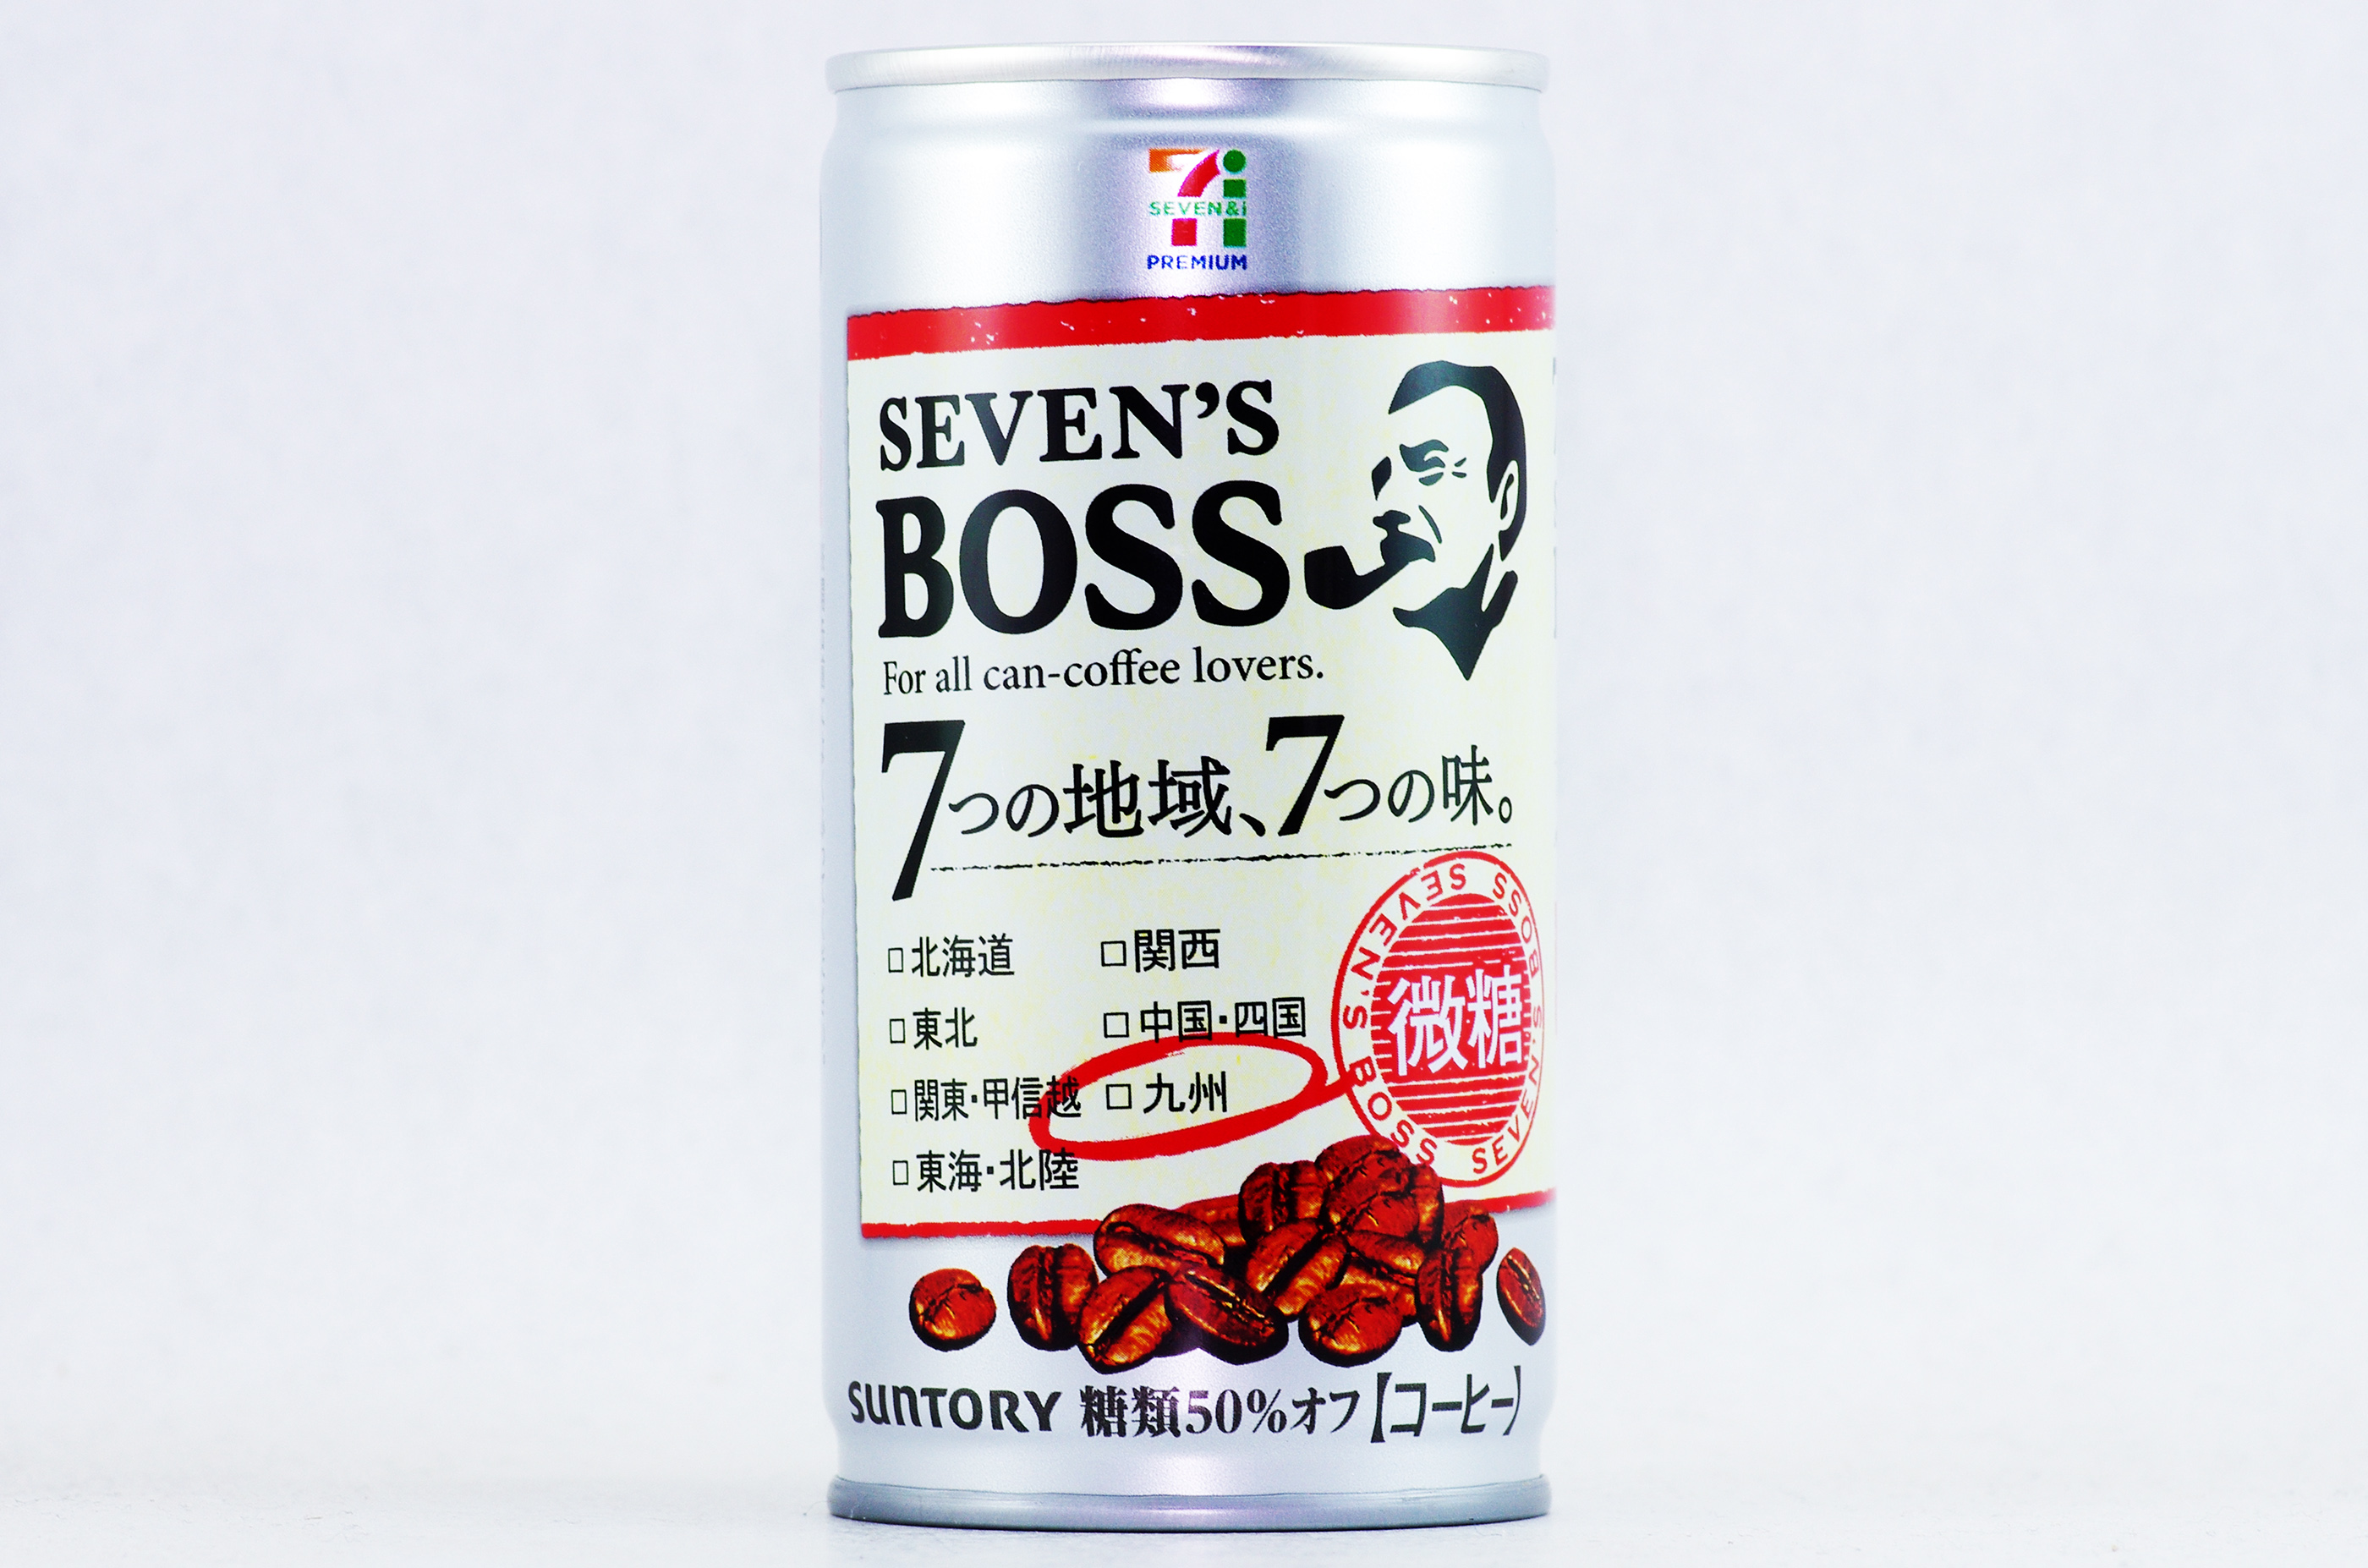 SEVEN'S BOSS 微糖 九州限定 2019年1月